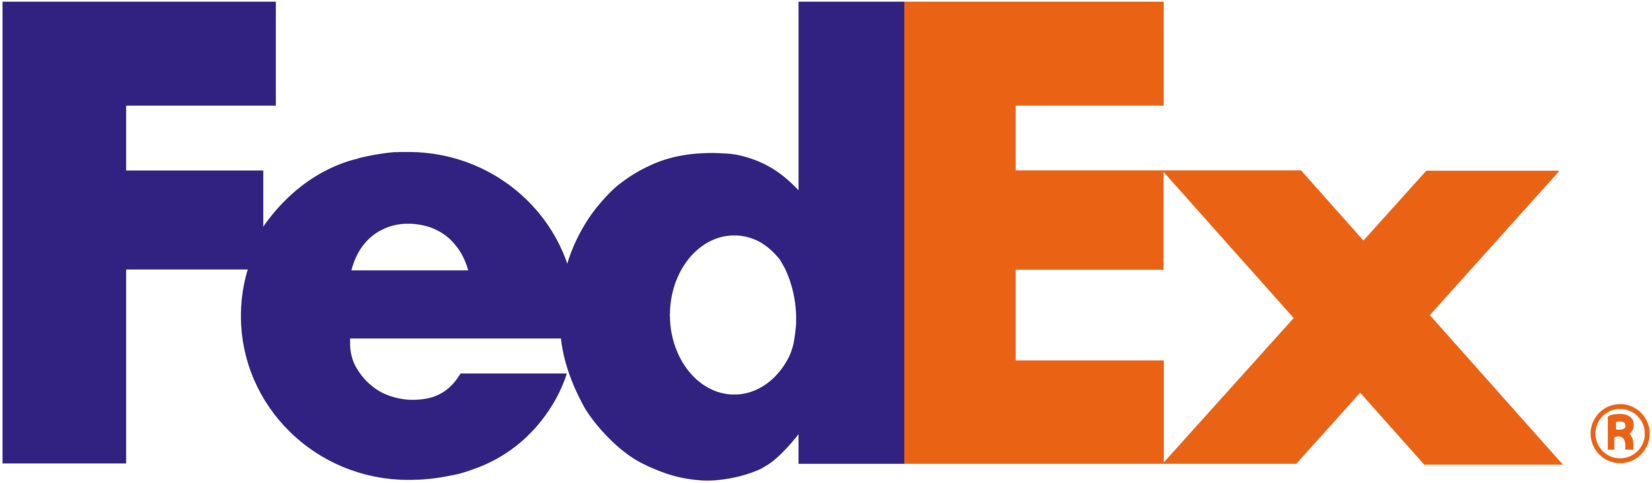 FedEx Services Logo - Fedex Services Logo Png Image